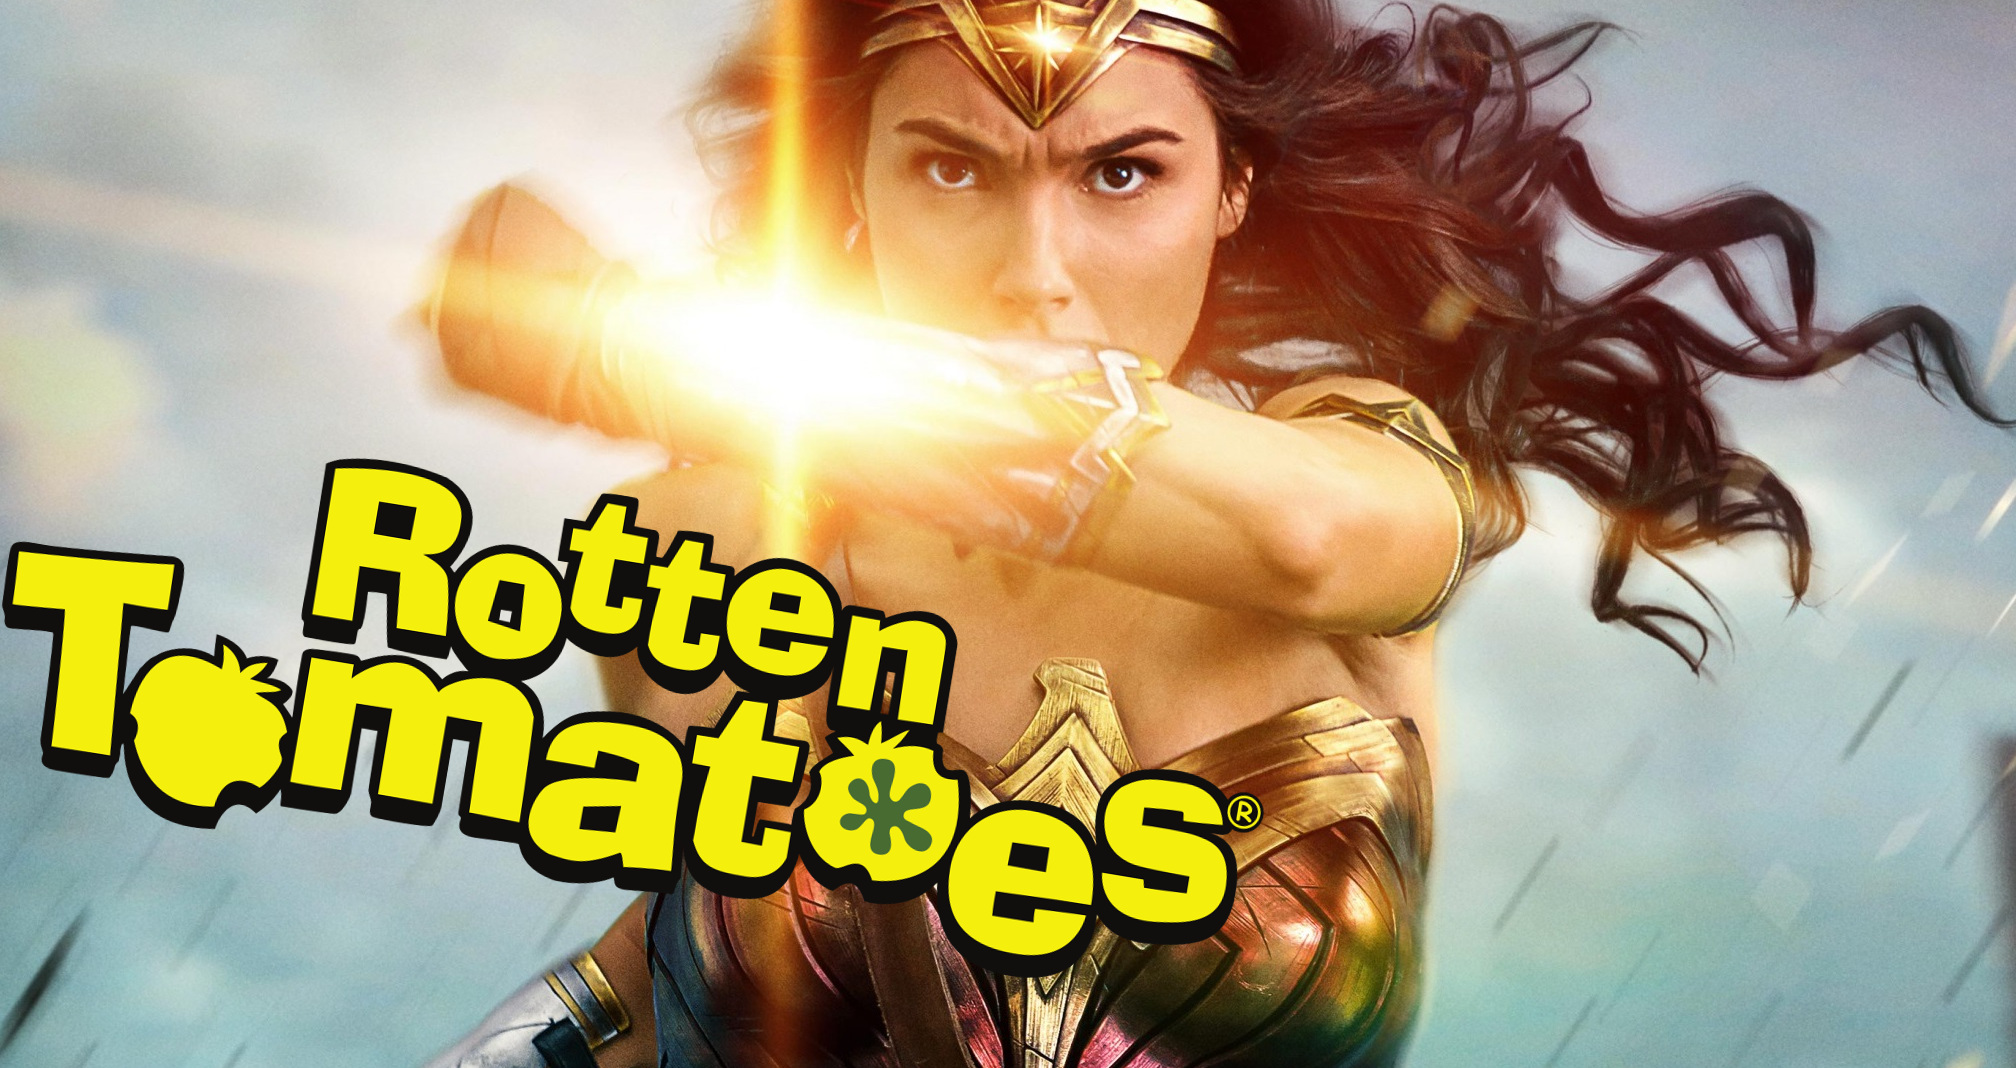 Sorprendentes críticas de Wonder Woman en Rotten Tomatoes